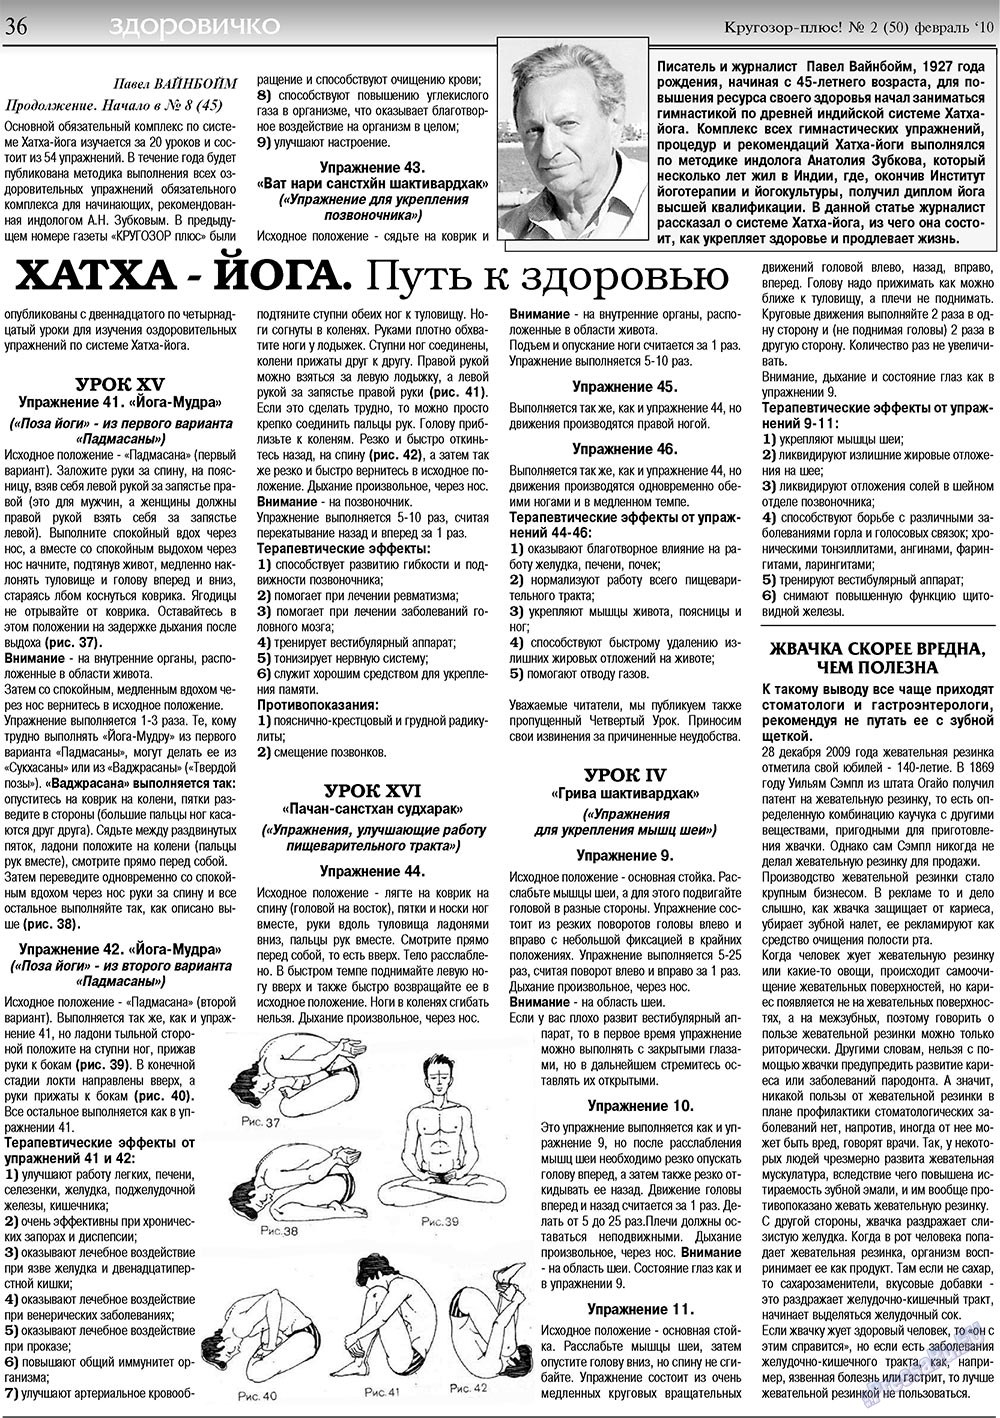 Кругозор плюс! (газета). 2010 год, номер 2, стр. 36